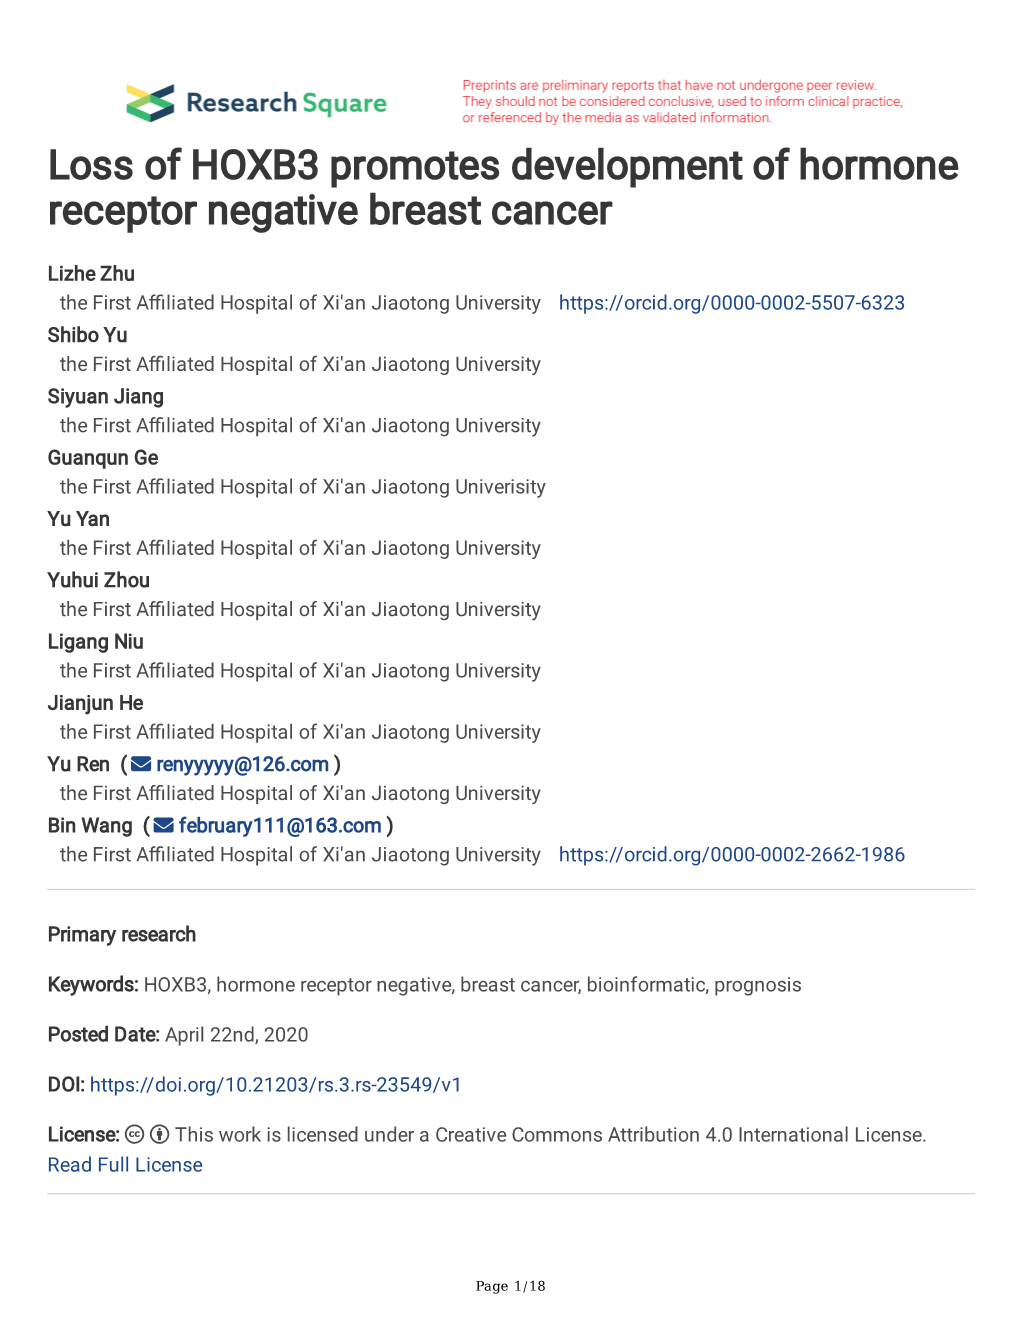 Loss of HOXB3 Promotes Development of Hormone Receptor Negative Breast Cancer